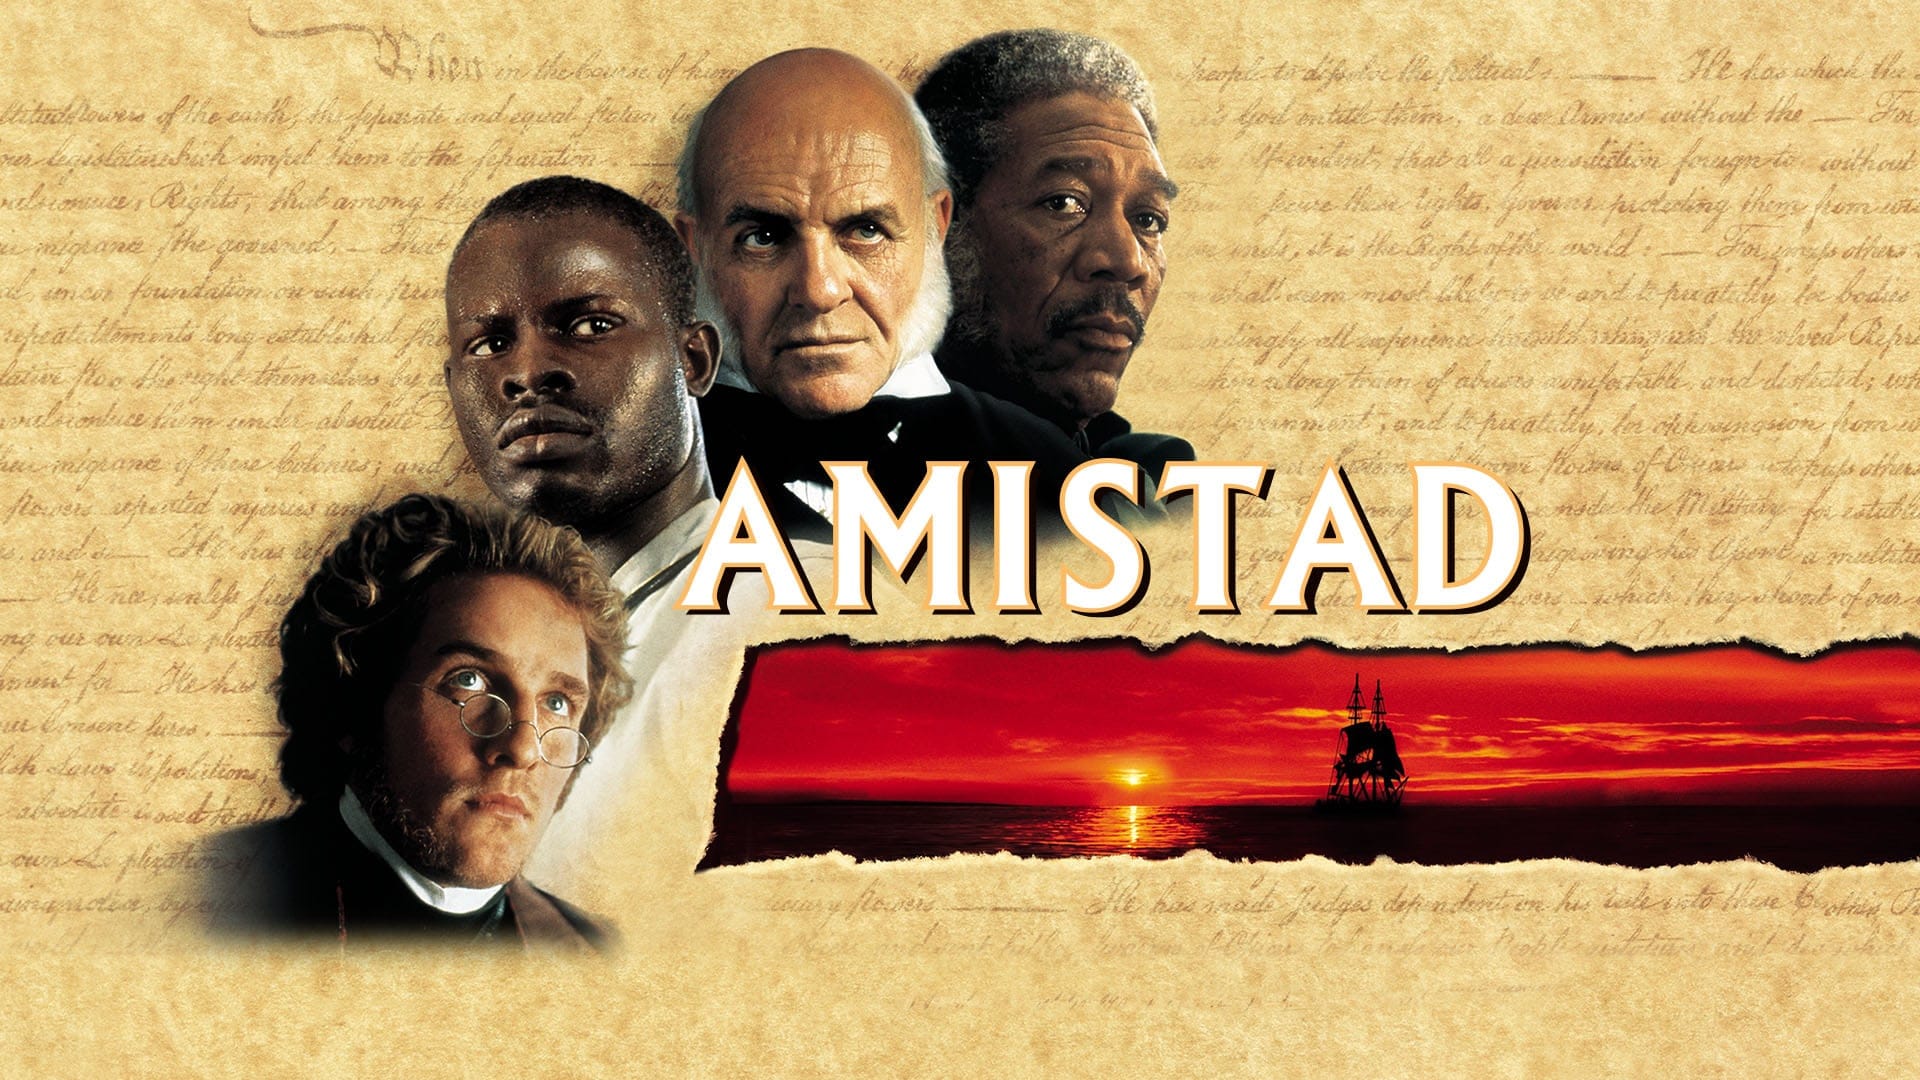 Watch Amistad Online | Stream Full Movies